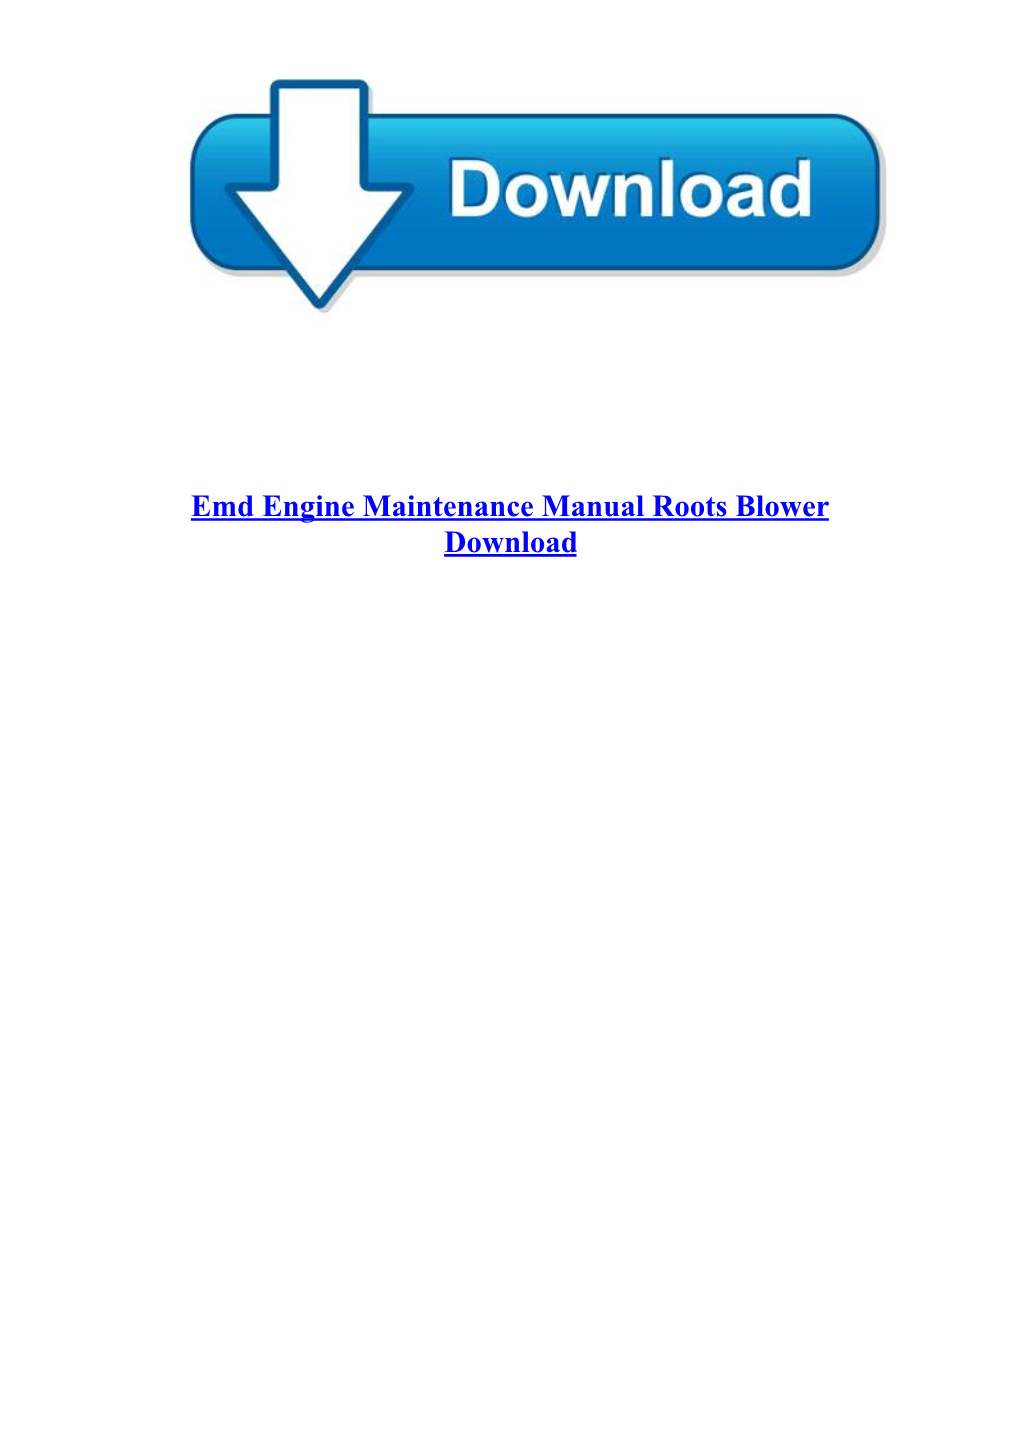 [Full-Ebook Pdf] Emd Engine Maintenance Manual